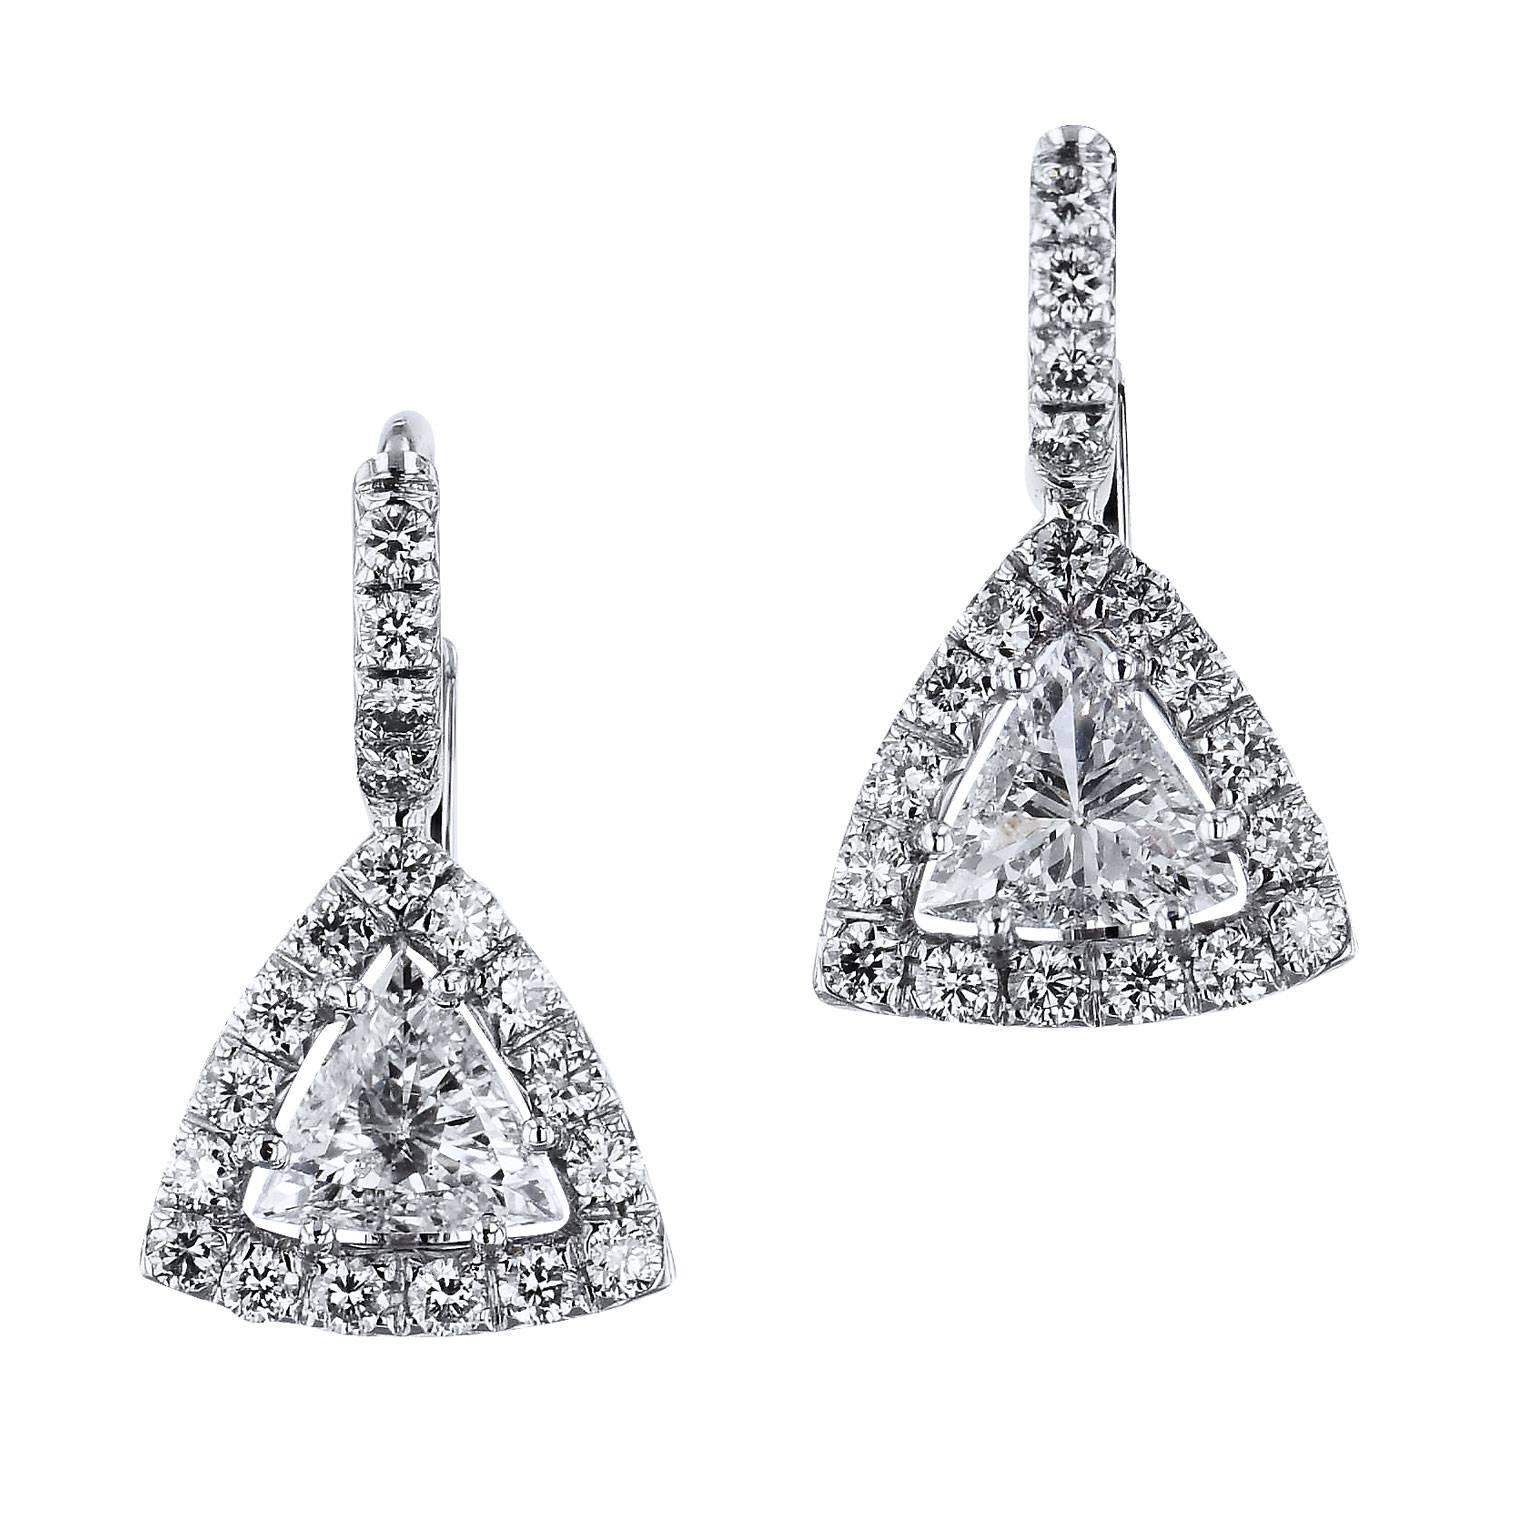 H & H 0.80 Carat Trillion Cut Diamond Lever-Back Earrings